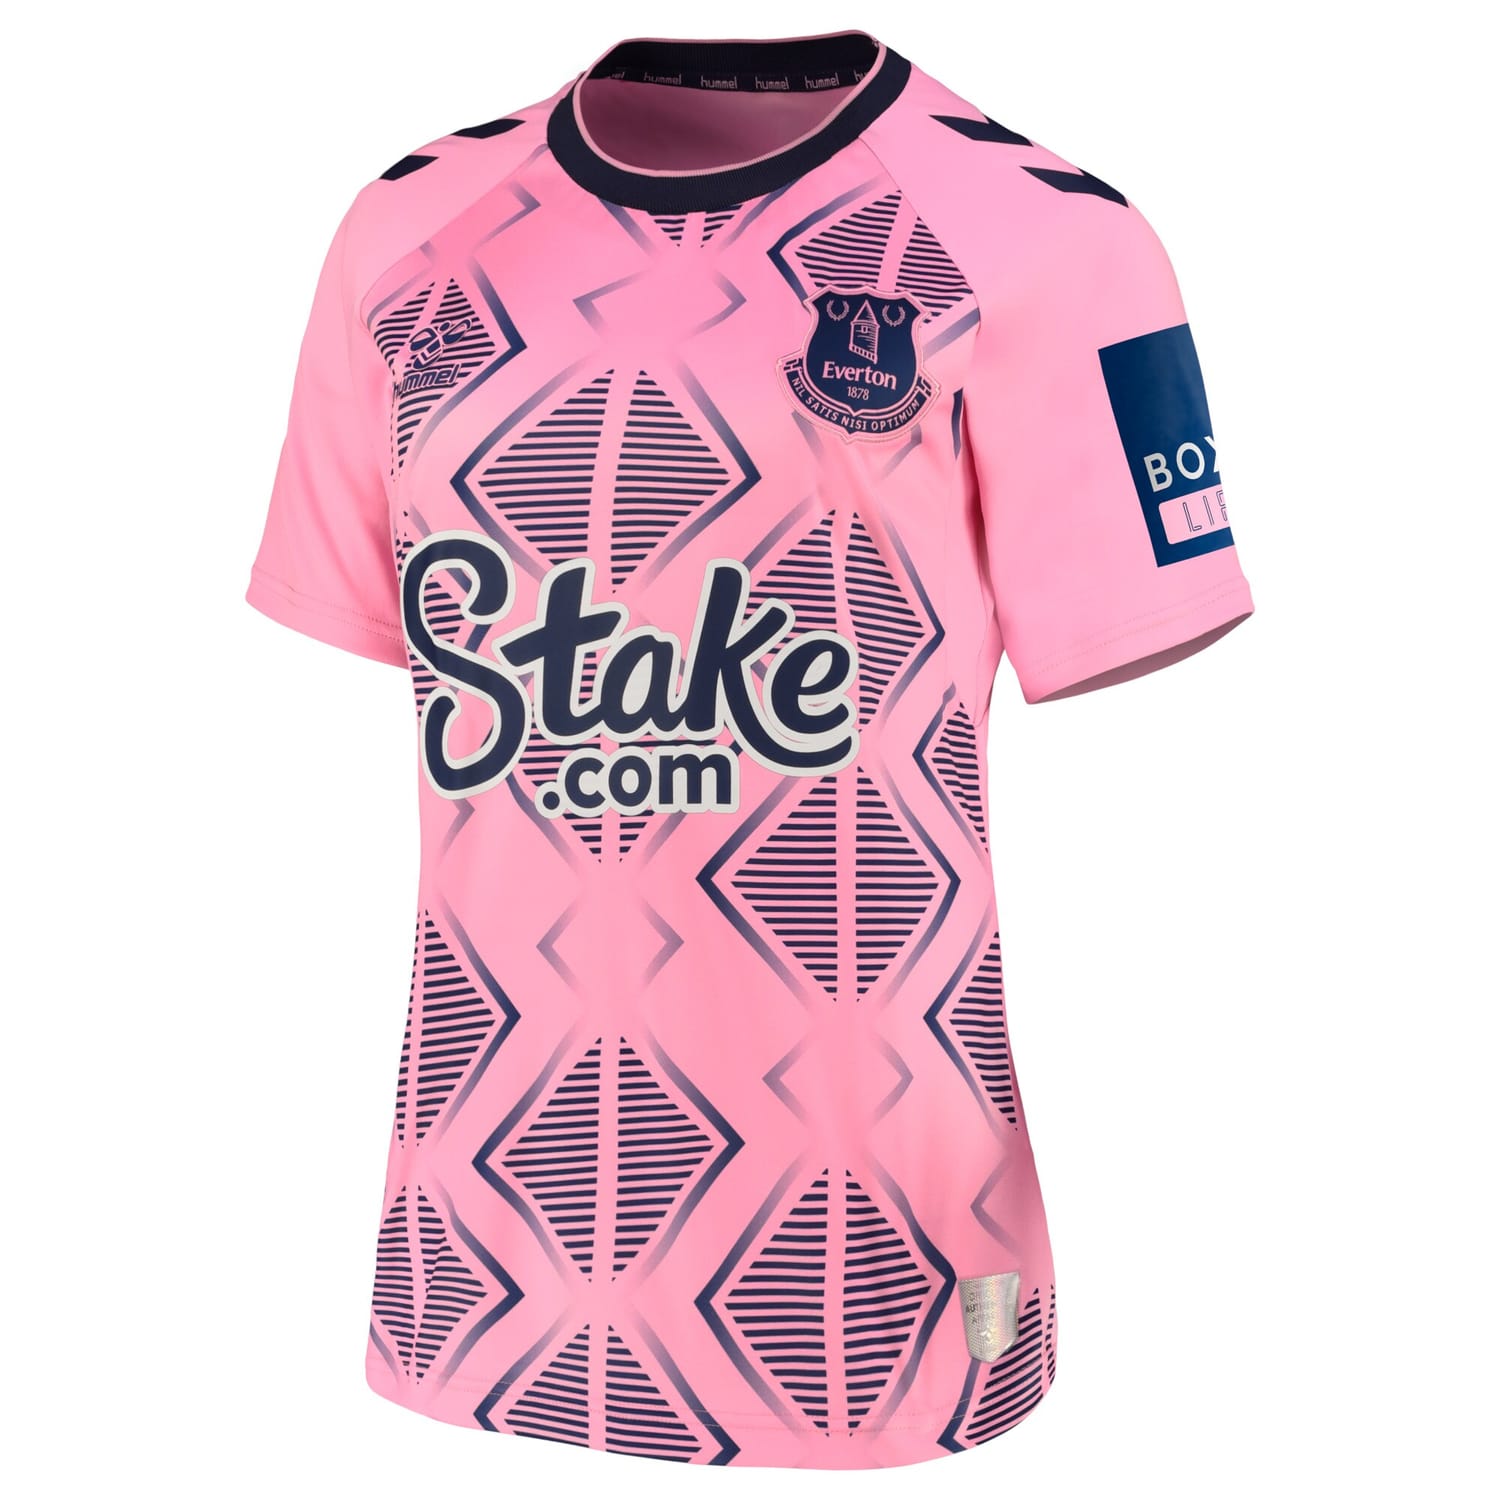 Premier League Everton Away Jersey Shirt 2022-23 player Katja Snoeijs 25 printing for Women